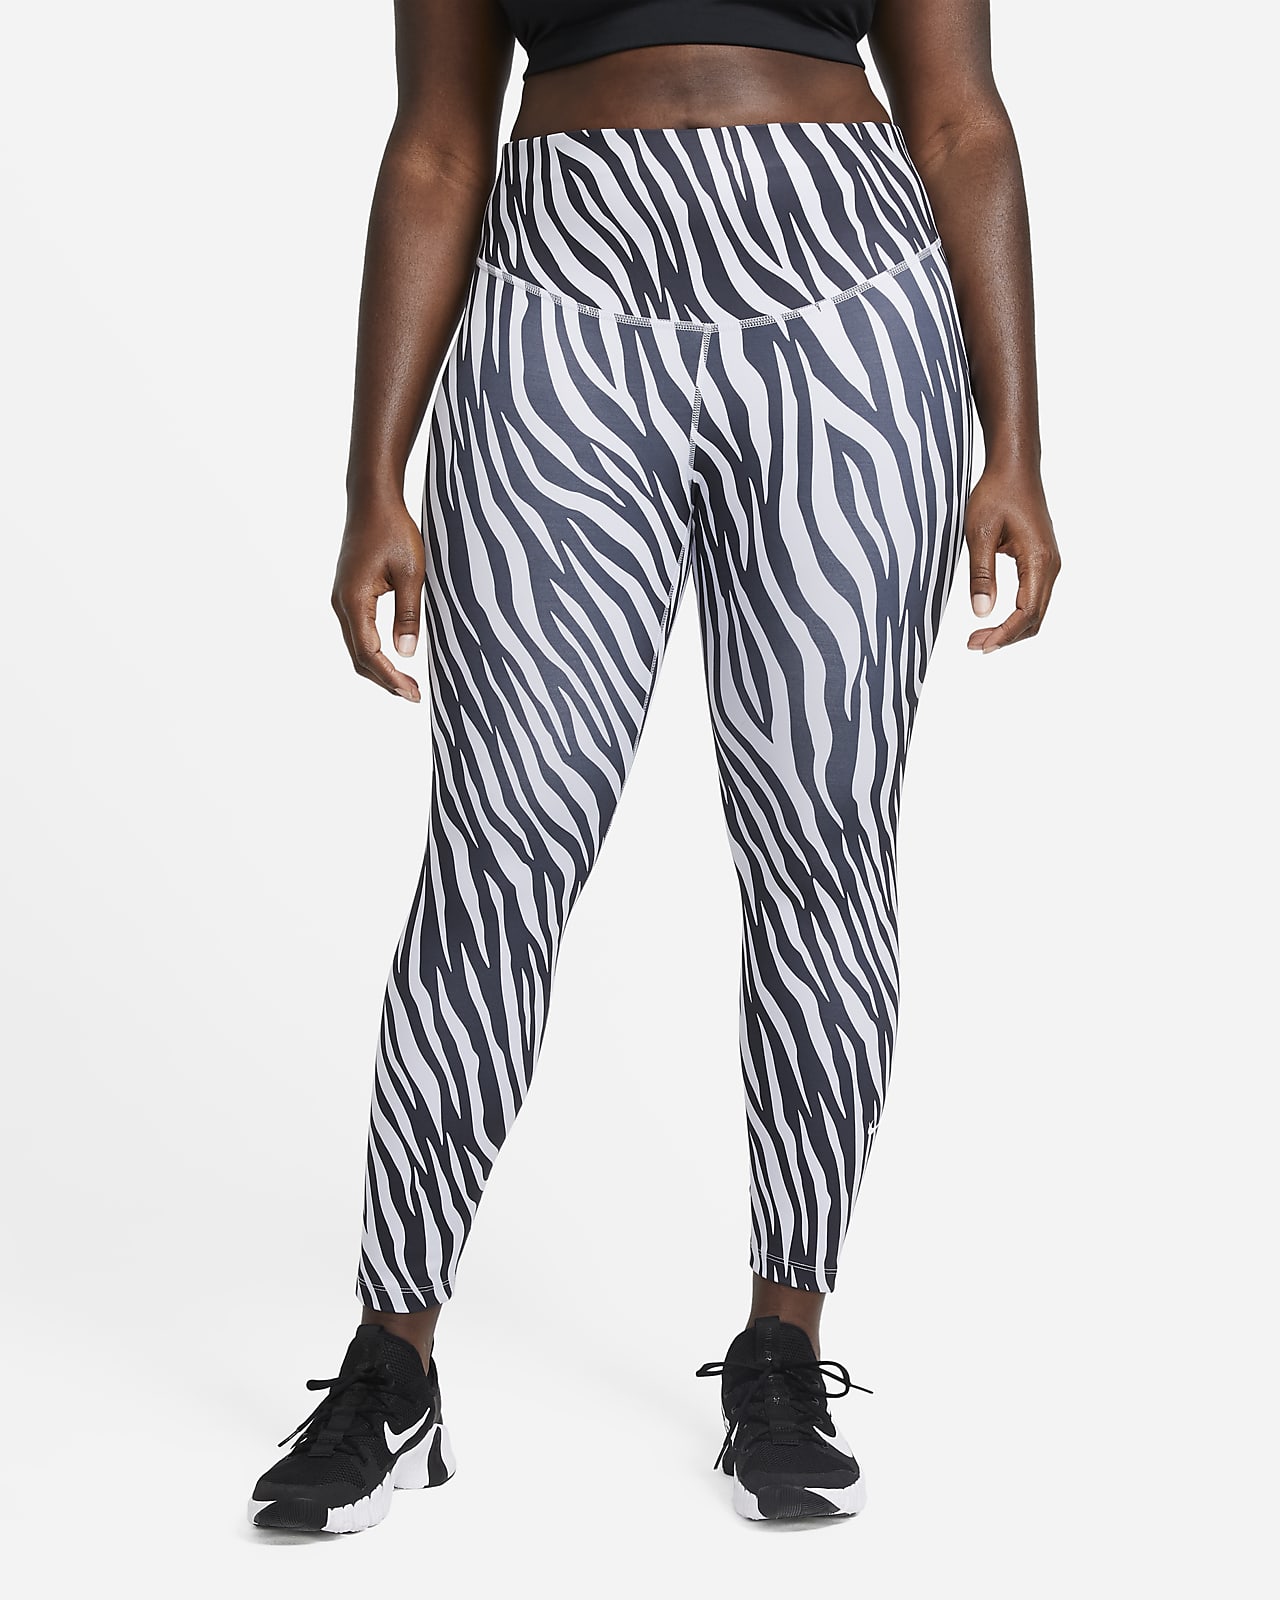 nike zebra print leggings